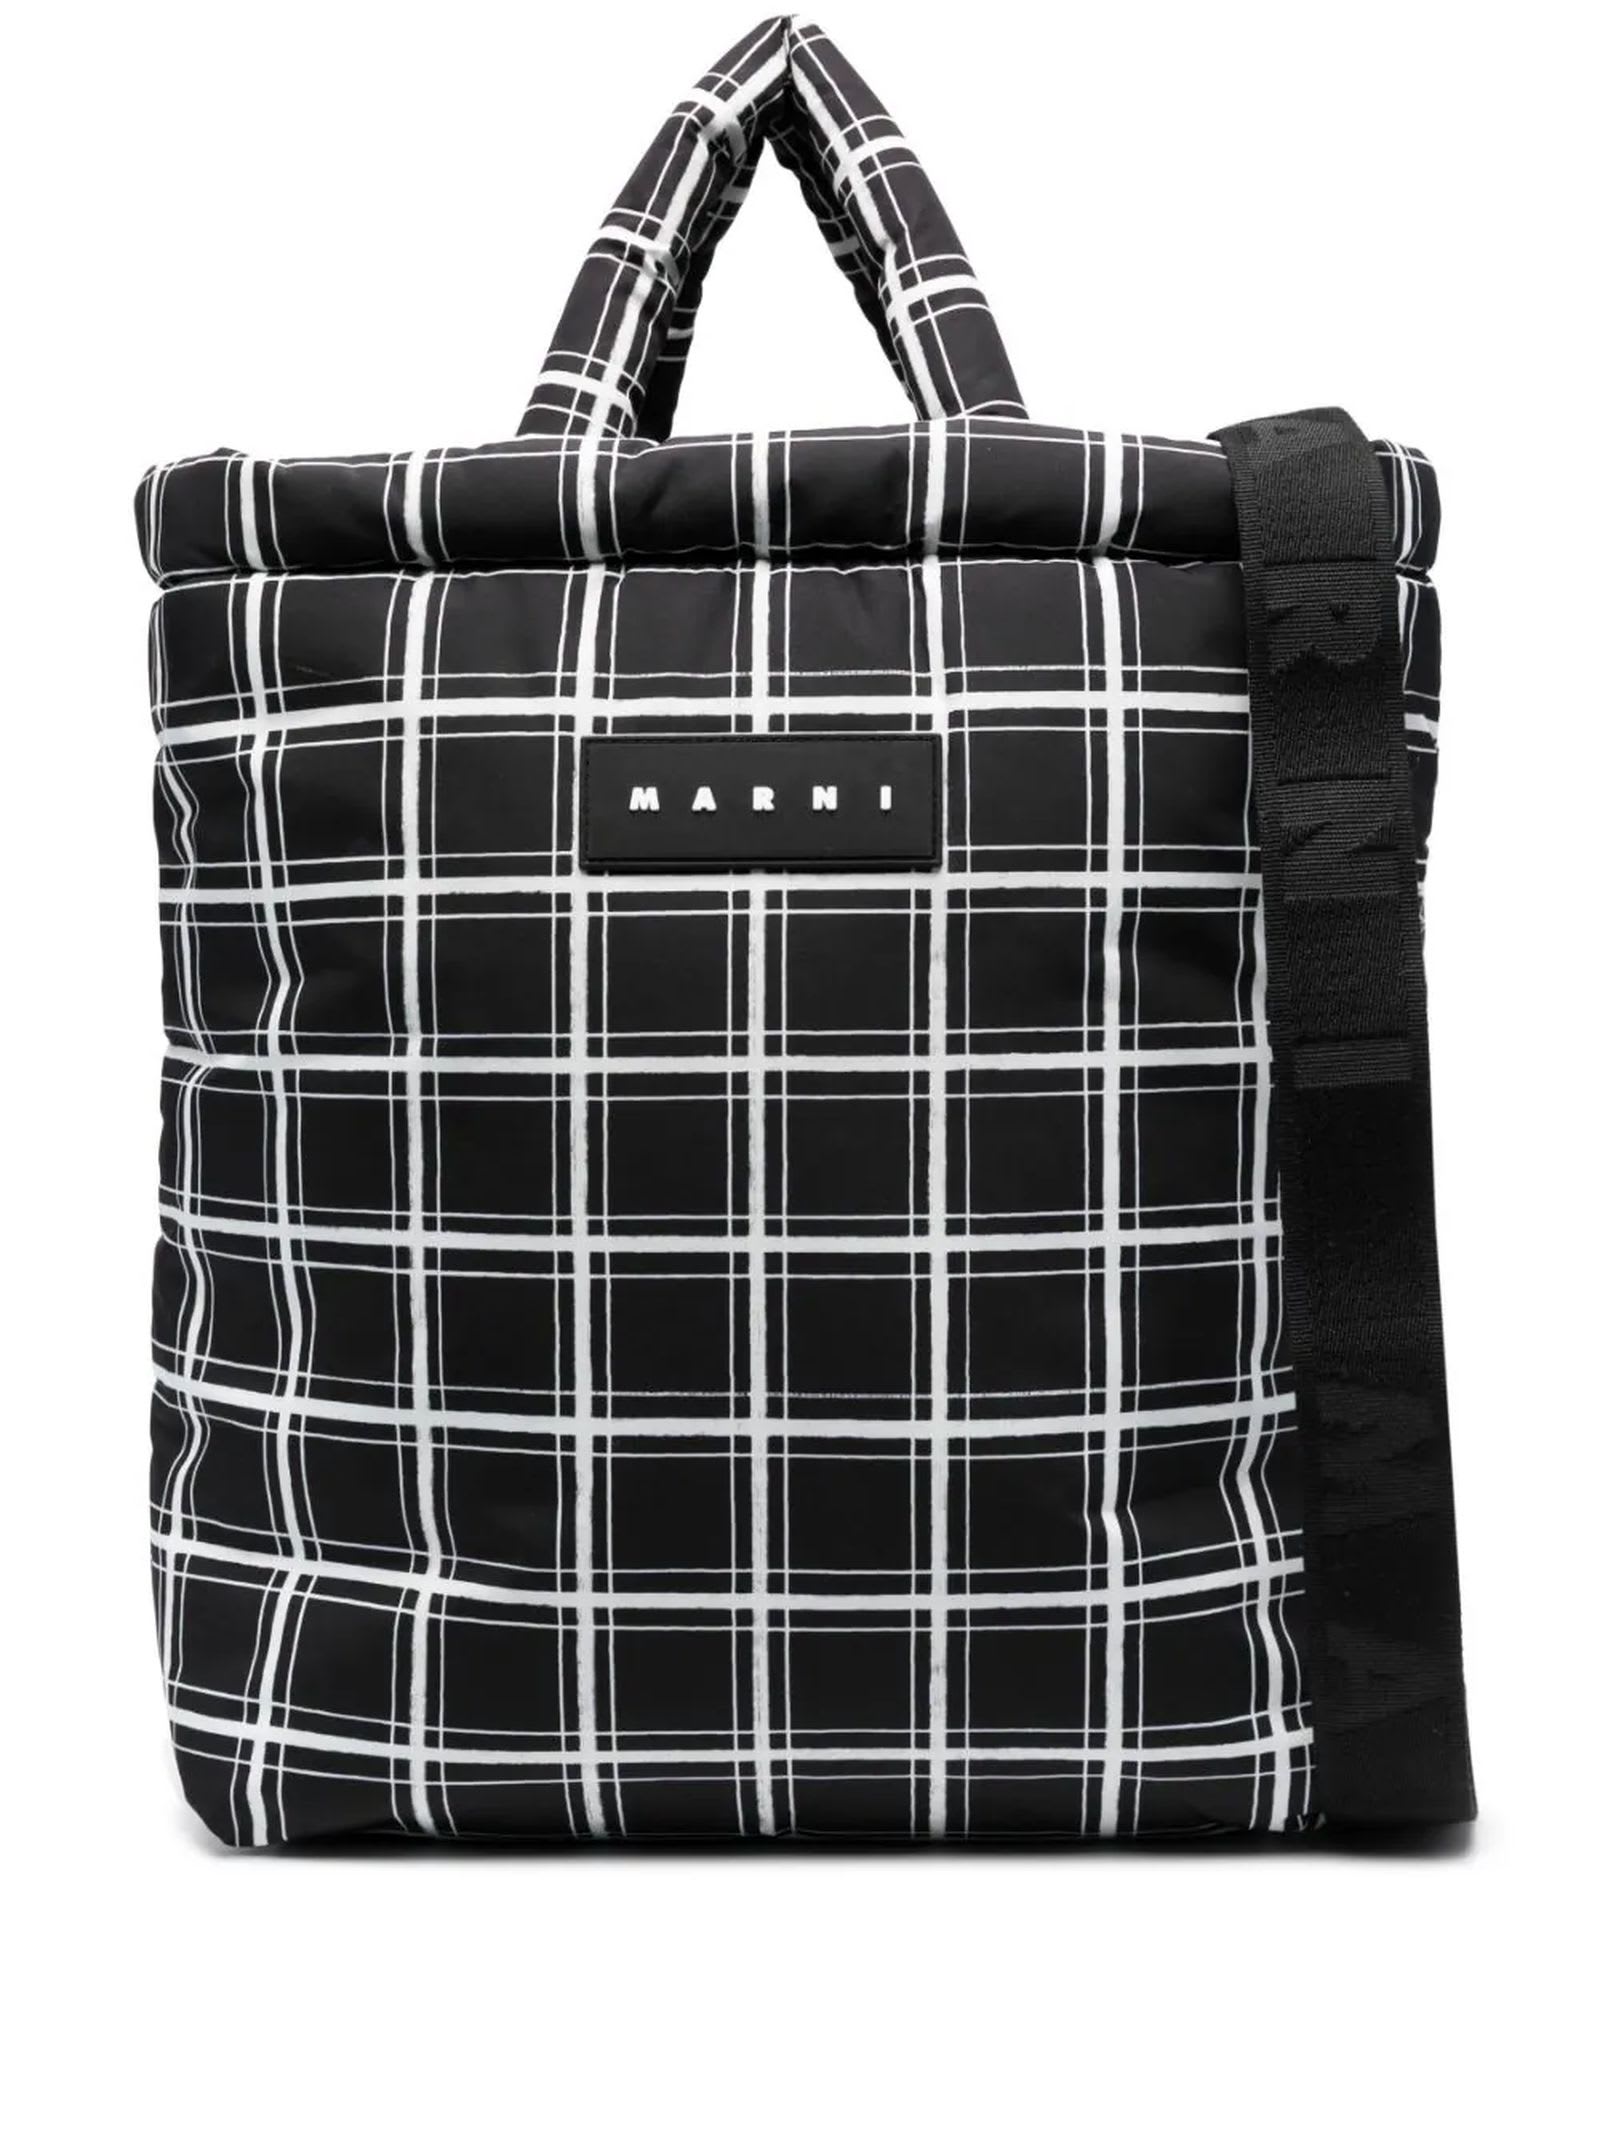 Marni Black And White Checkered Tote Bag